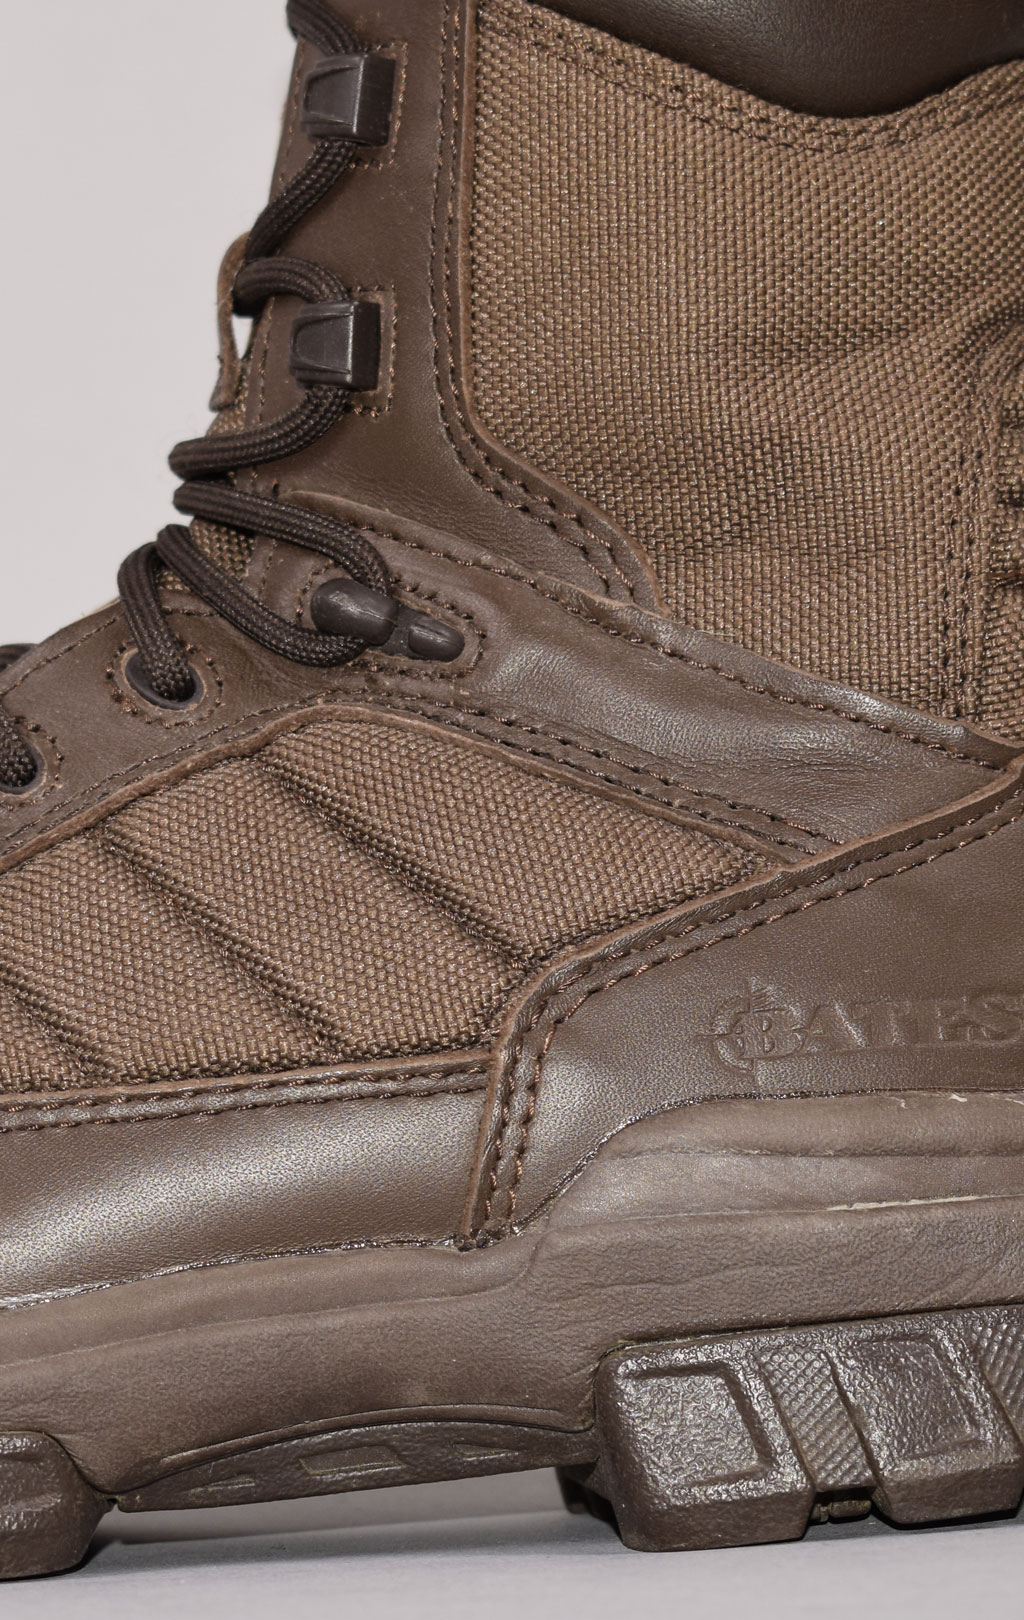 Женские ботинки-берцы BATES British Army PATROL Boots brown б/у 